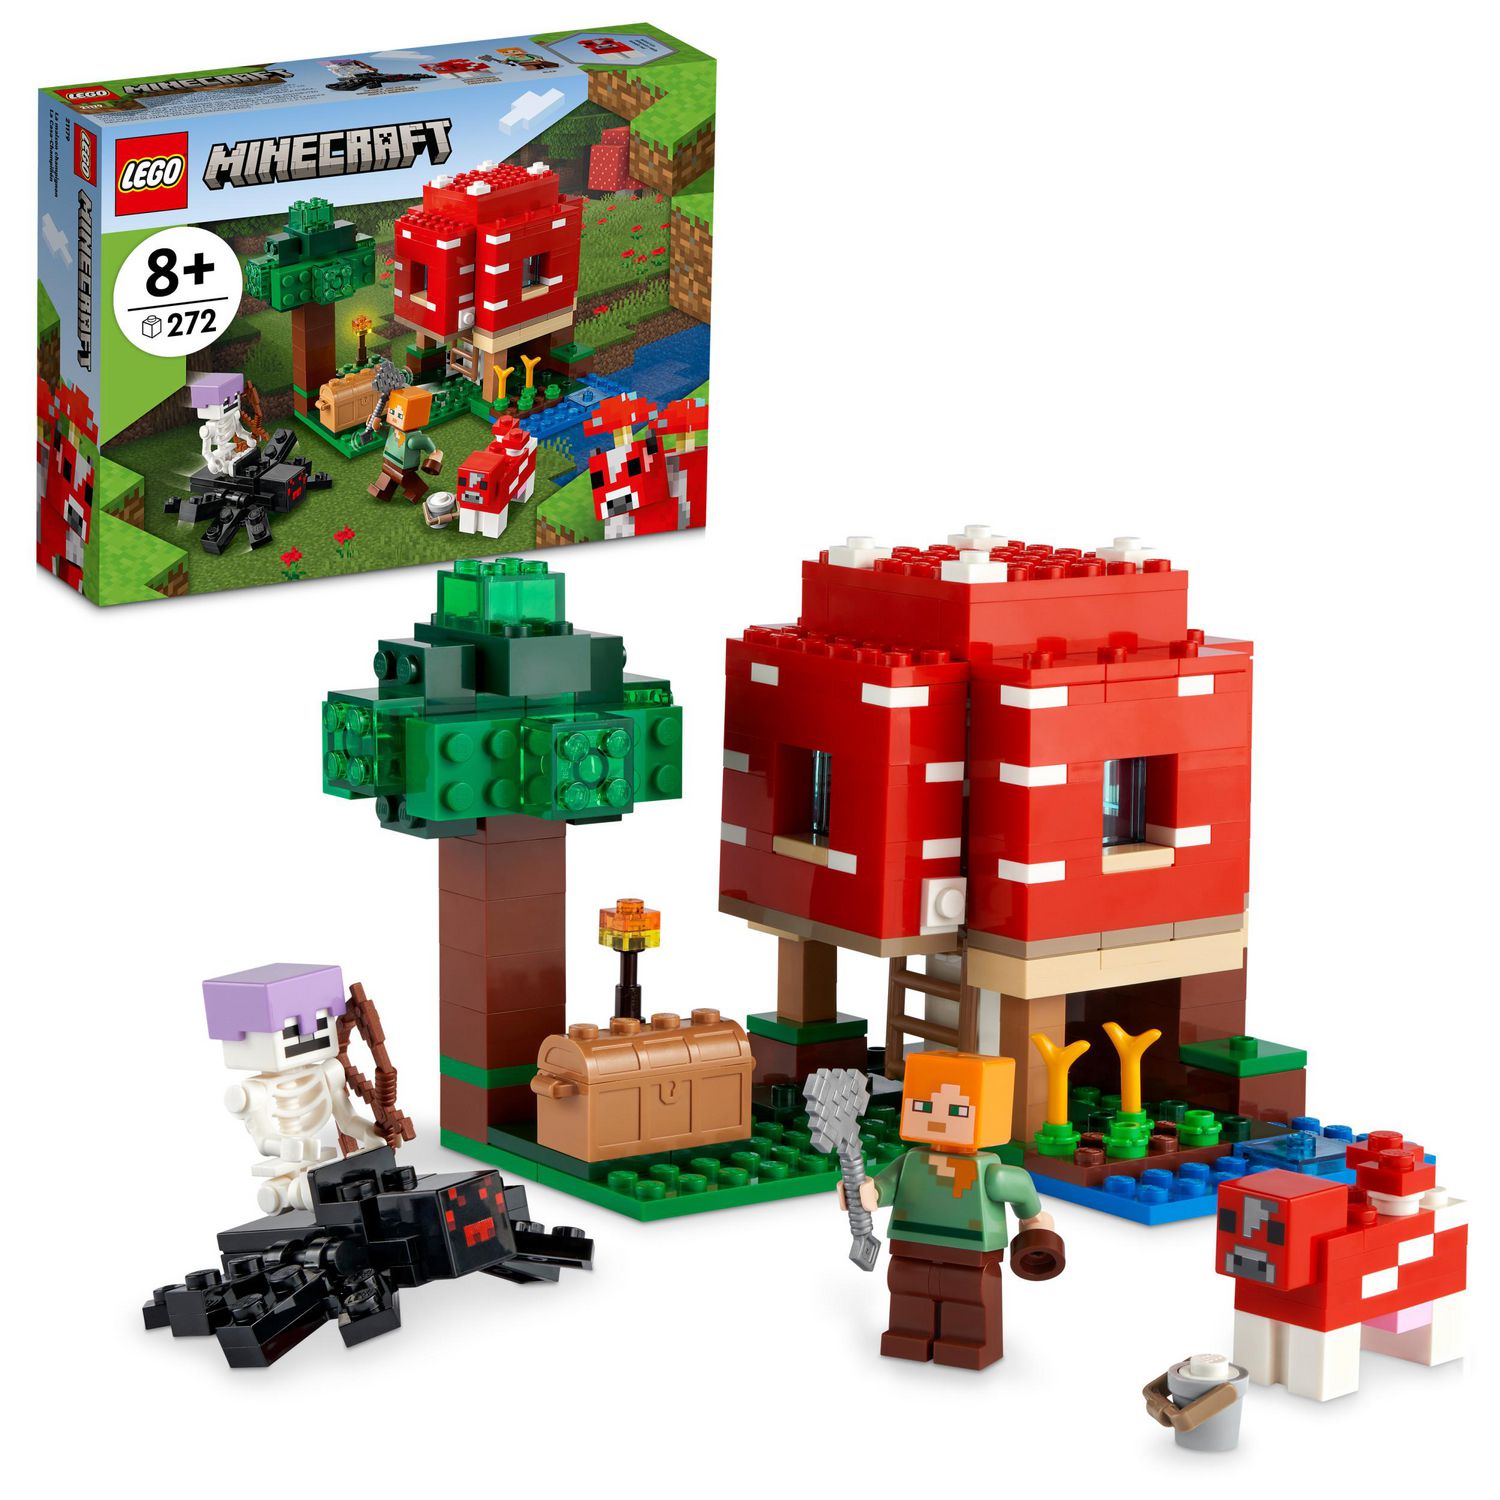 LEGO Minecraft The Mushroom House 21179 Toy Building Pieces) | Walmart Canada